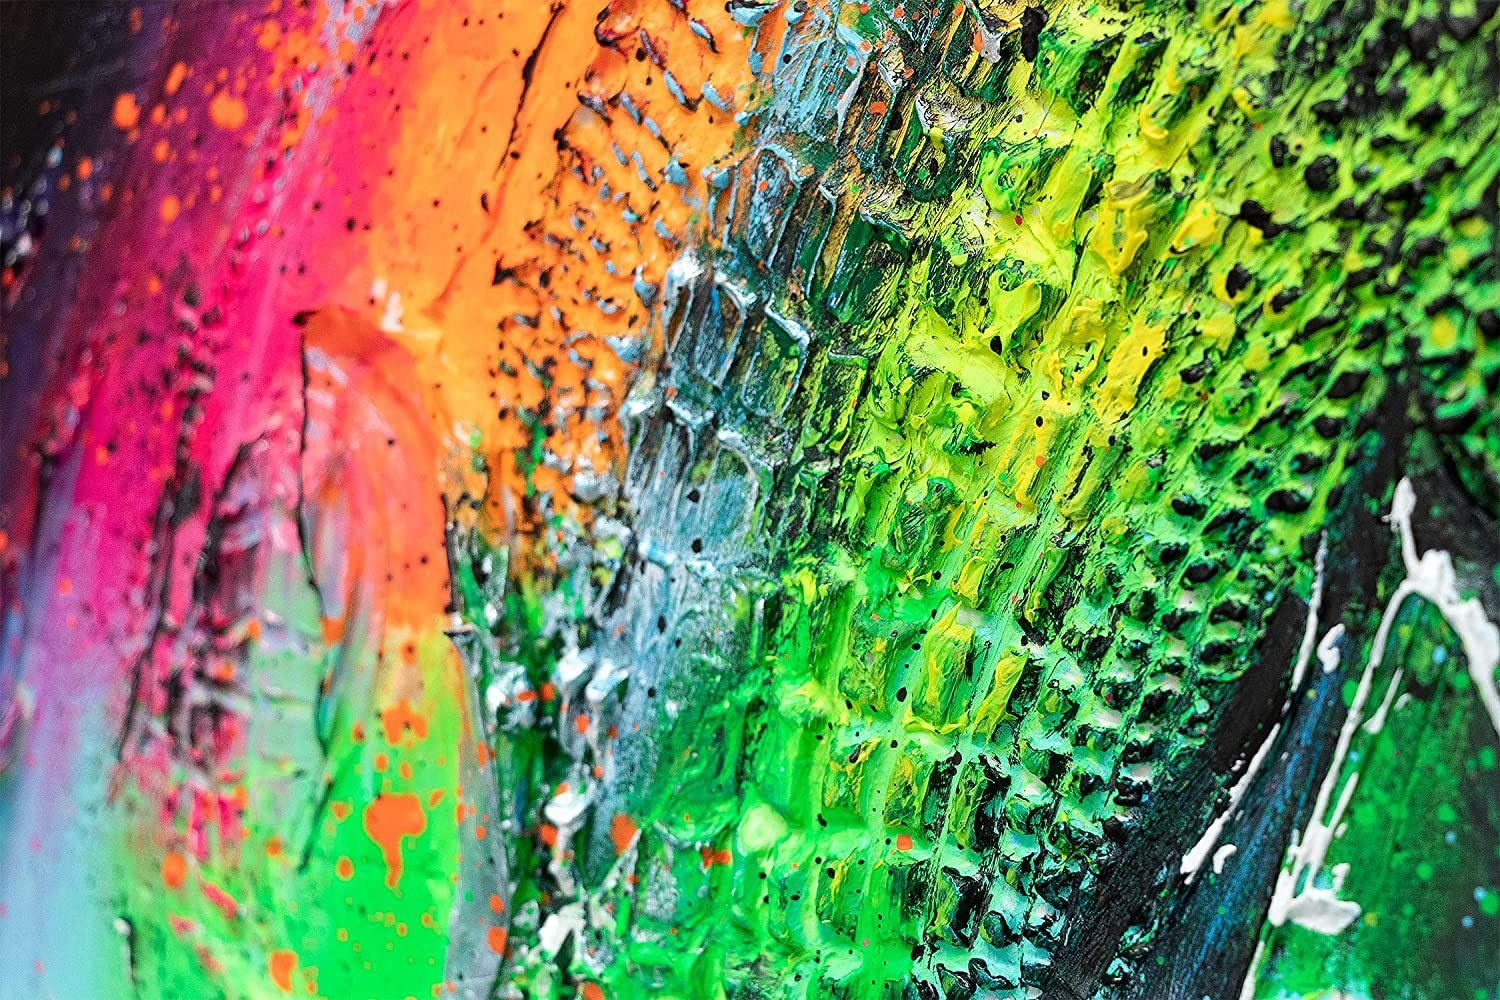 YS-Art Gemälde Bunt Vertikales Abstraktion, Fokus, Regenbogen Bild Schwarz Handgemalt Leinwand